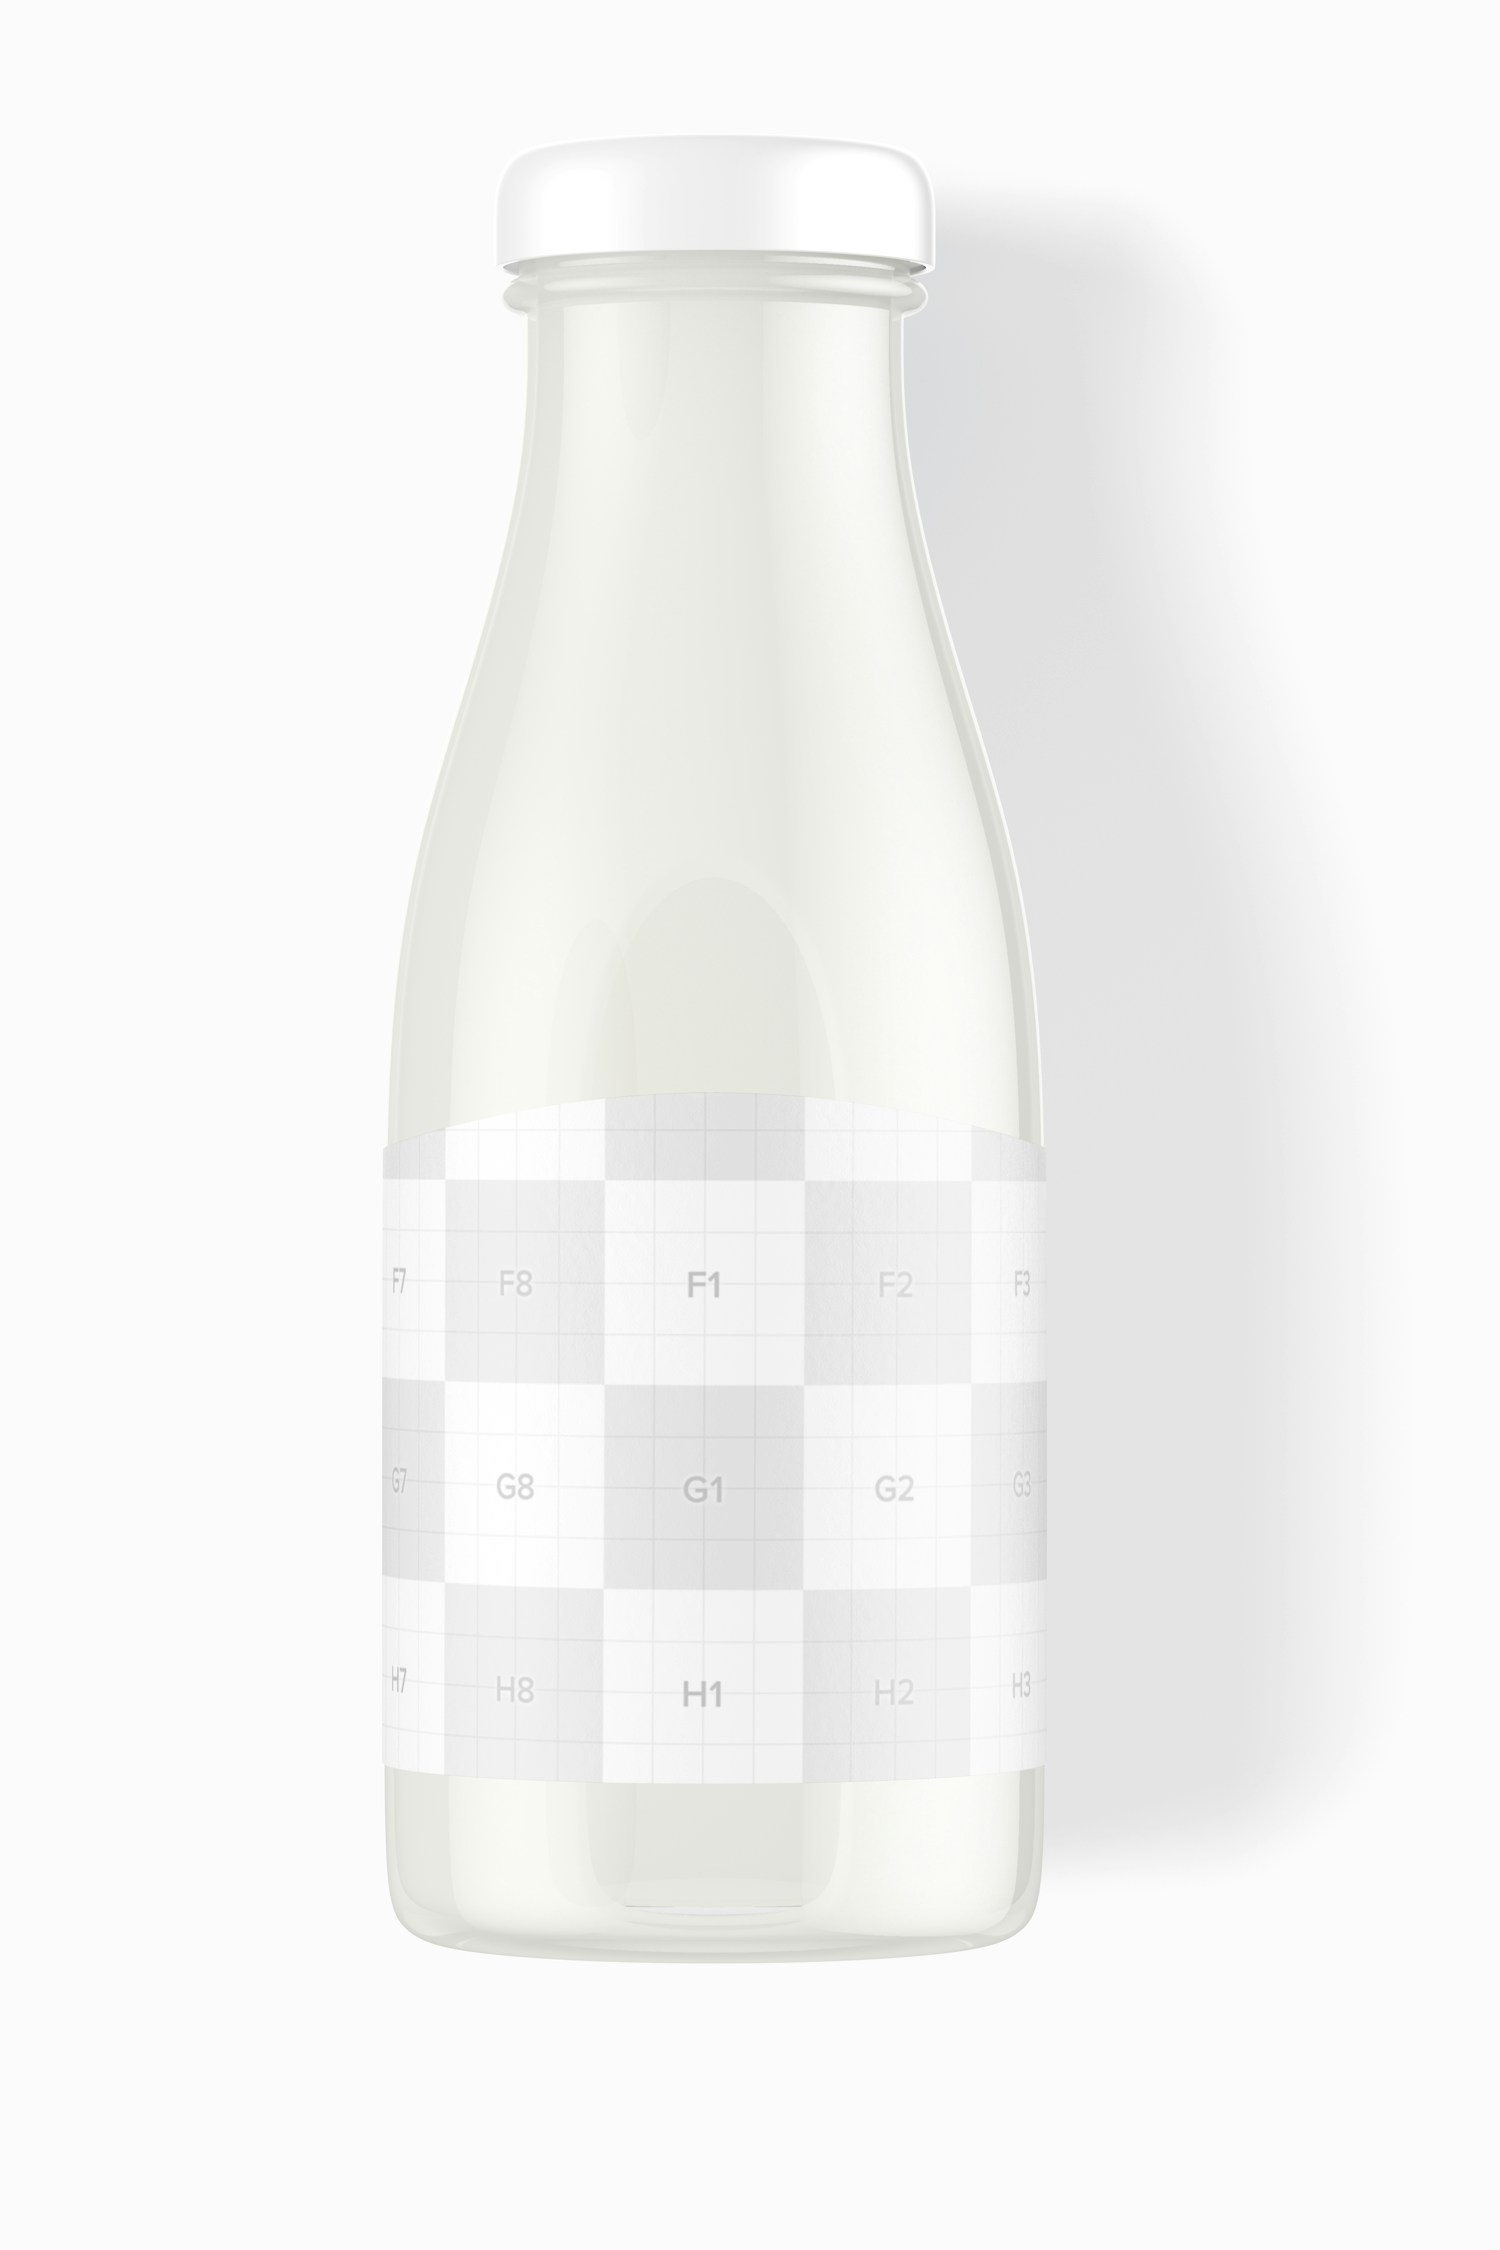 11 oz Glass Milk Bottle Mockup, Top View